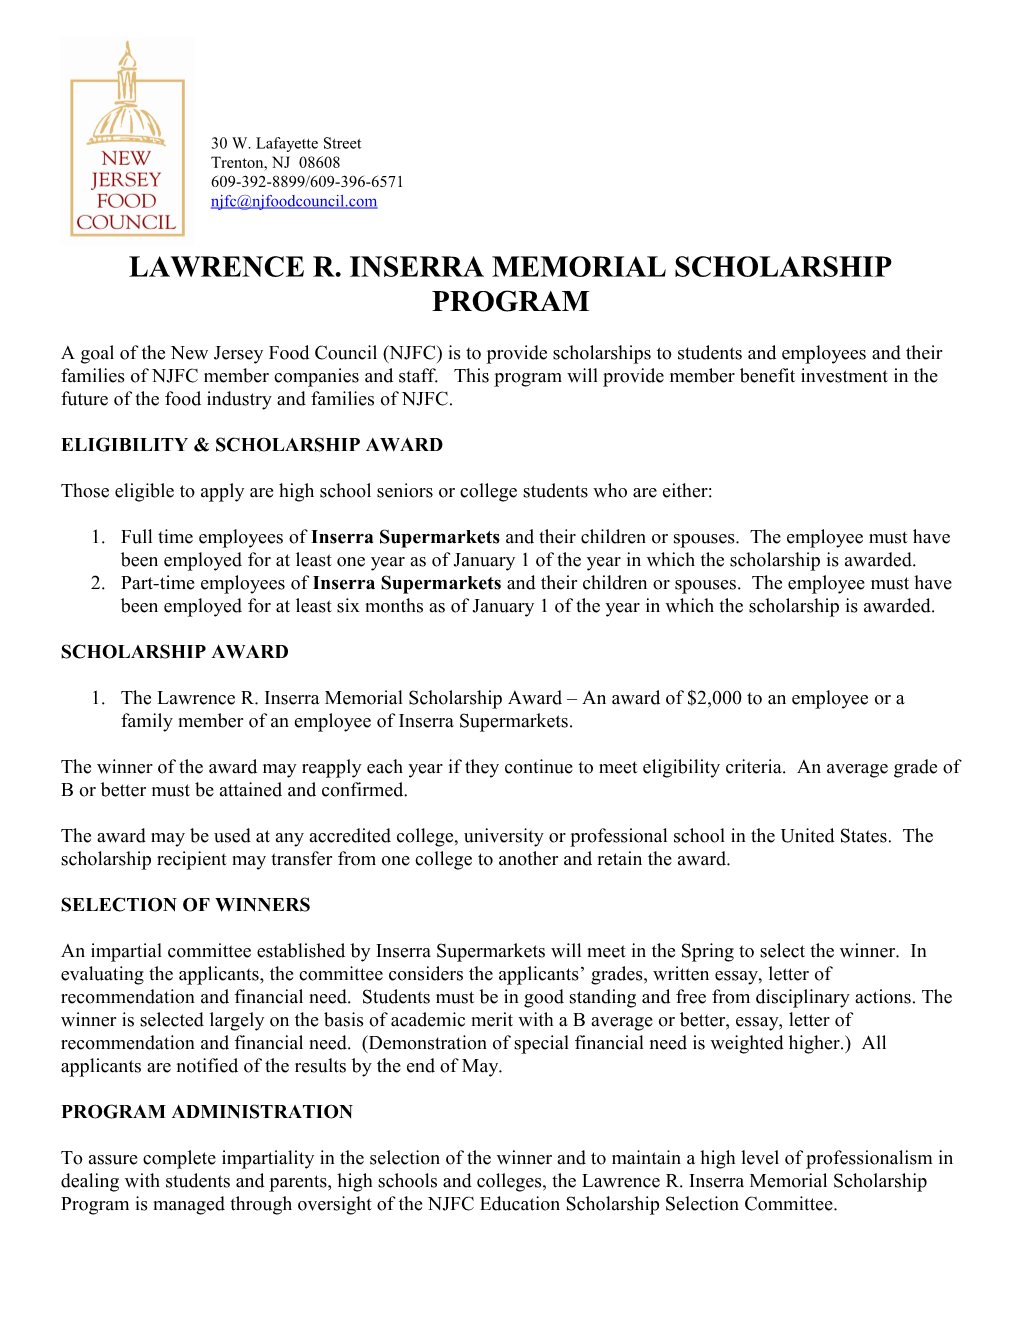 Lawrence R. Inserra Memorial Scholarship Program